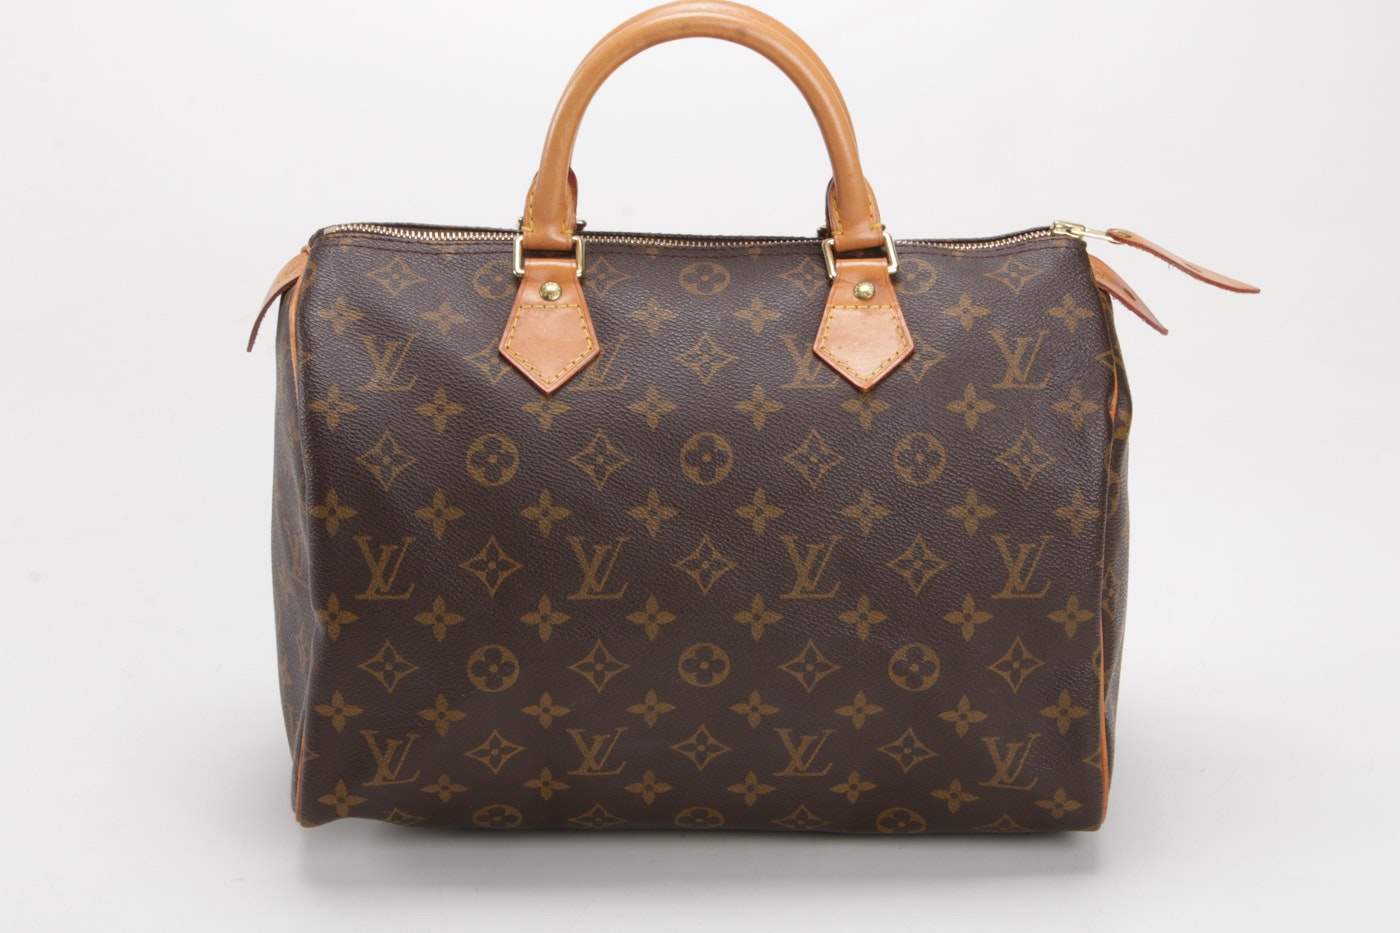 Louis Vuitton Speedy 30 Handbag in Monogram Coated Canvas and Vachetta Leather | EBTH